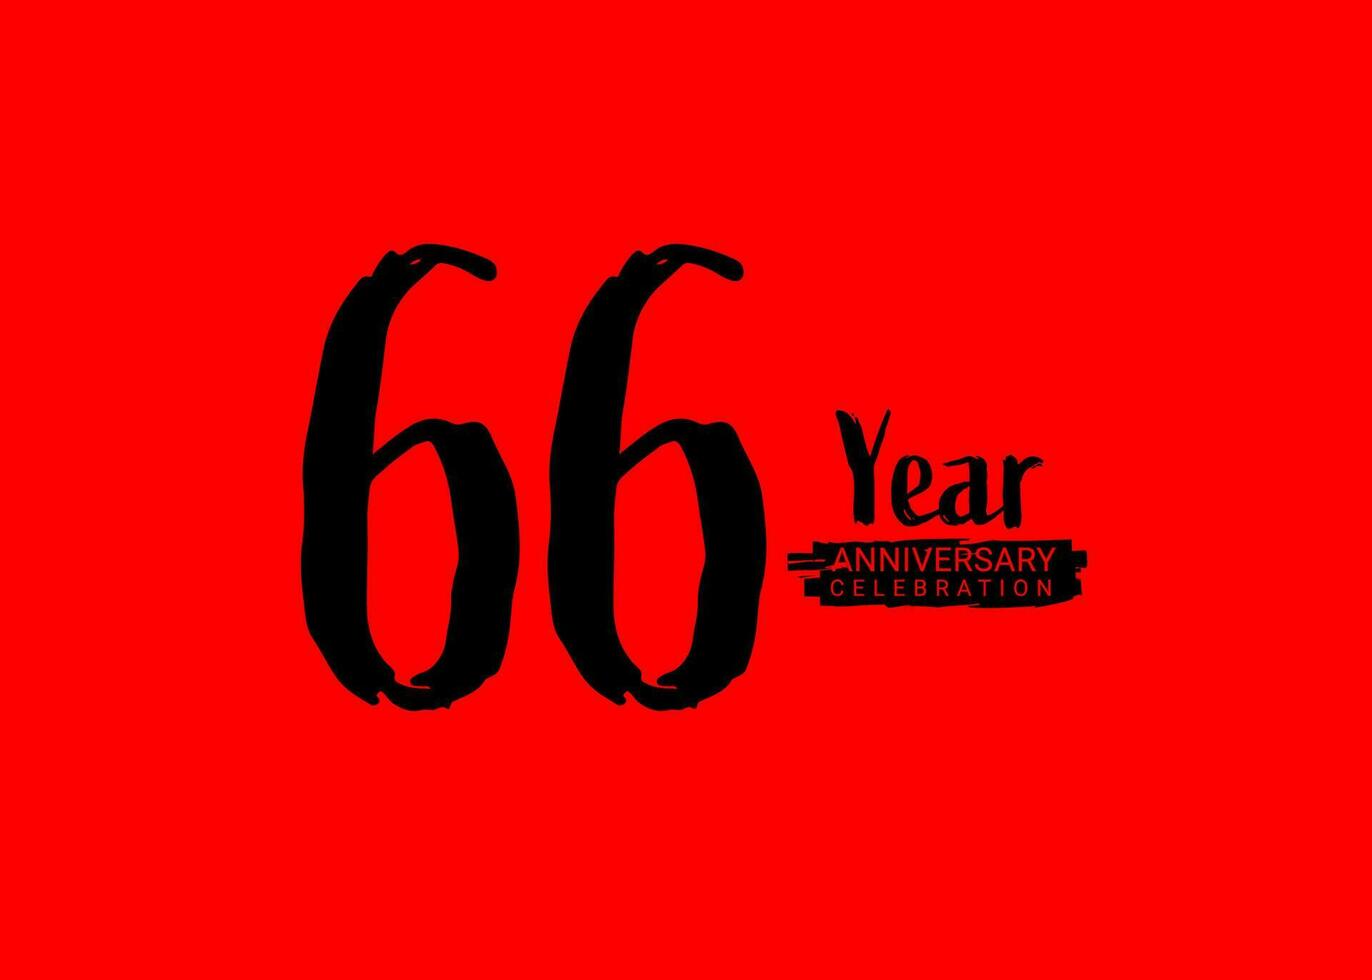 66 Years Anniversary Celebration logo on red background, 66 number logo design, 66th Birthday Logo,  logotype Anniversary, Vector Anniversary For Celebration, poster, Invitation Card